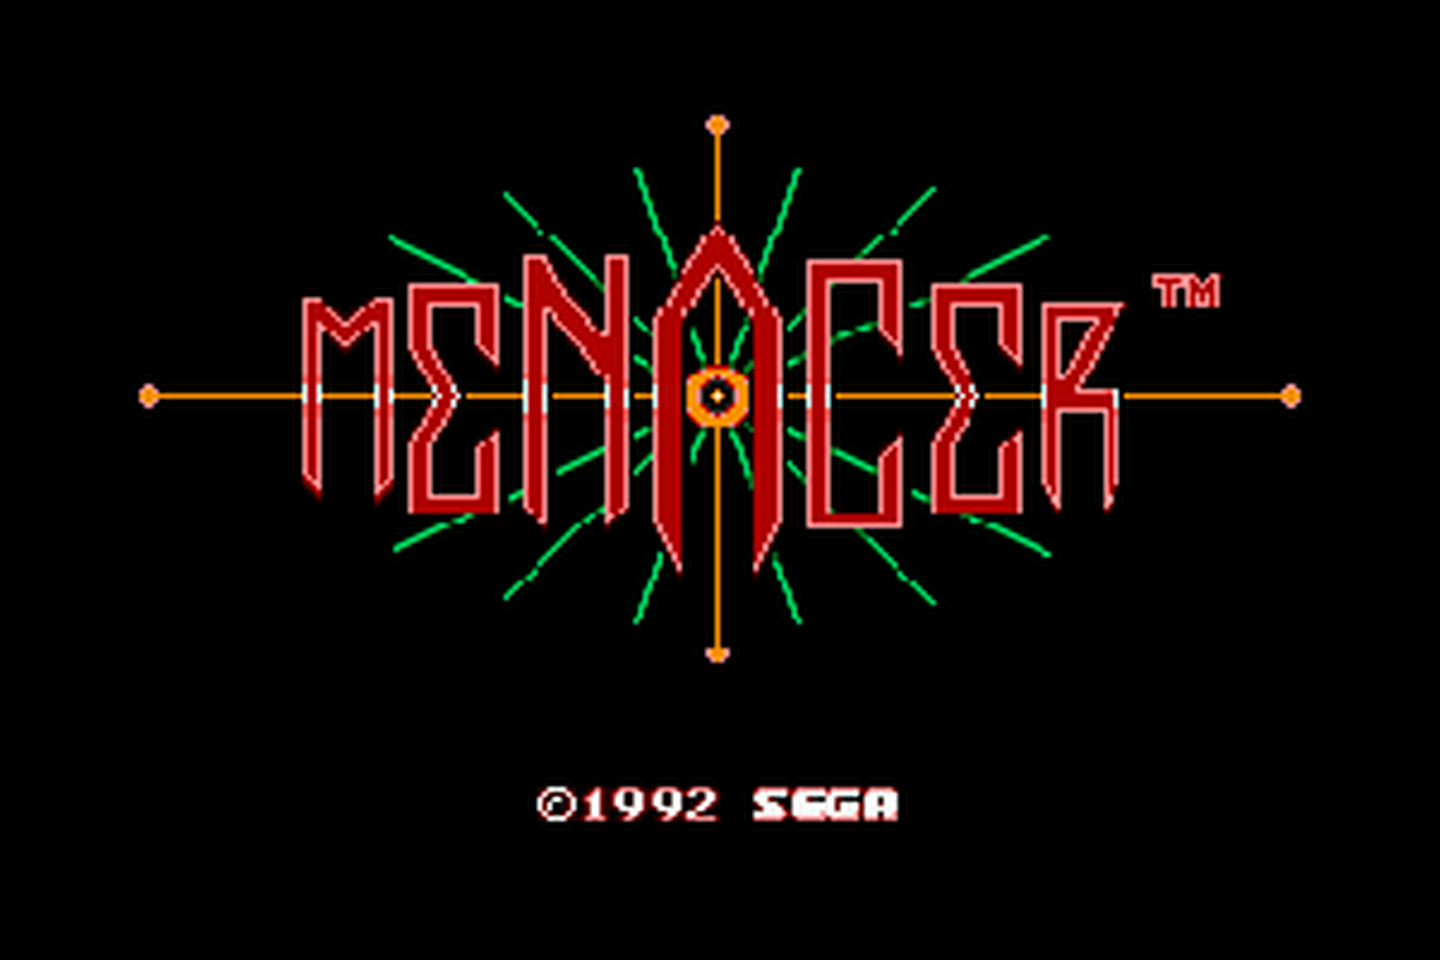 SMD GameBase Menacer_6_Game_Cartridge SEGA_Enterprises_Ltd. 1992